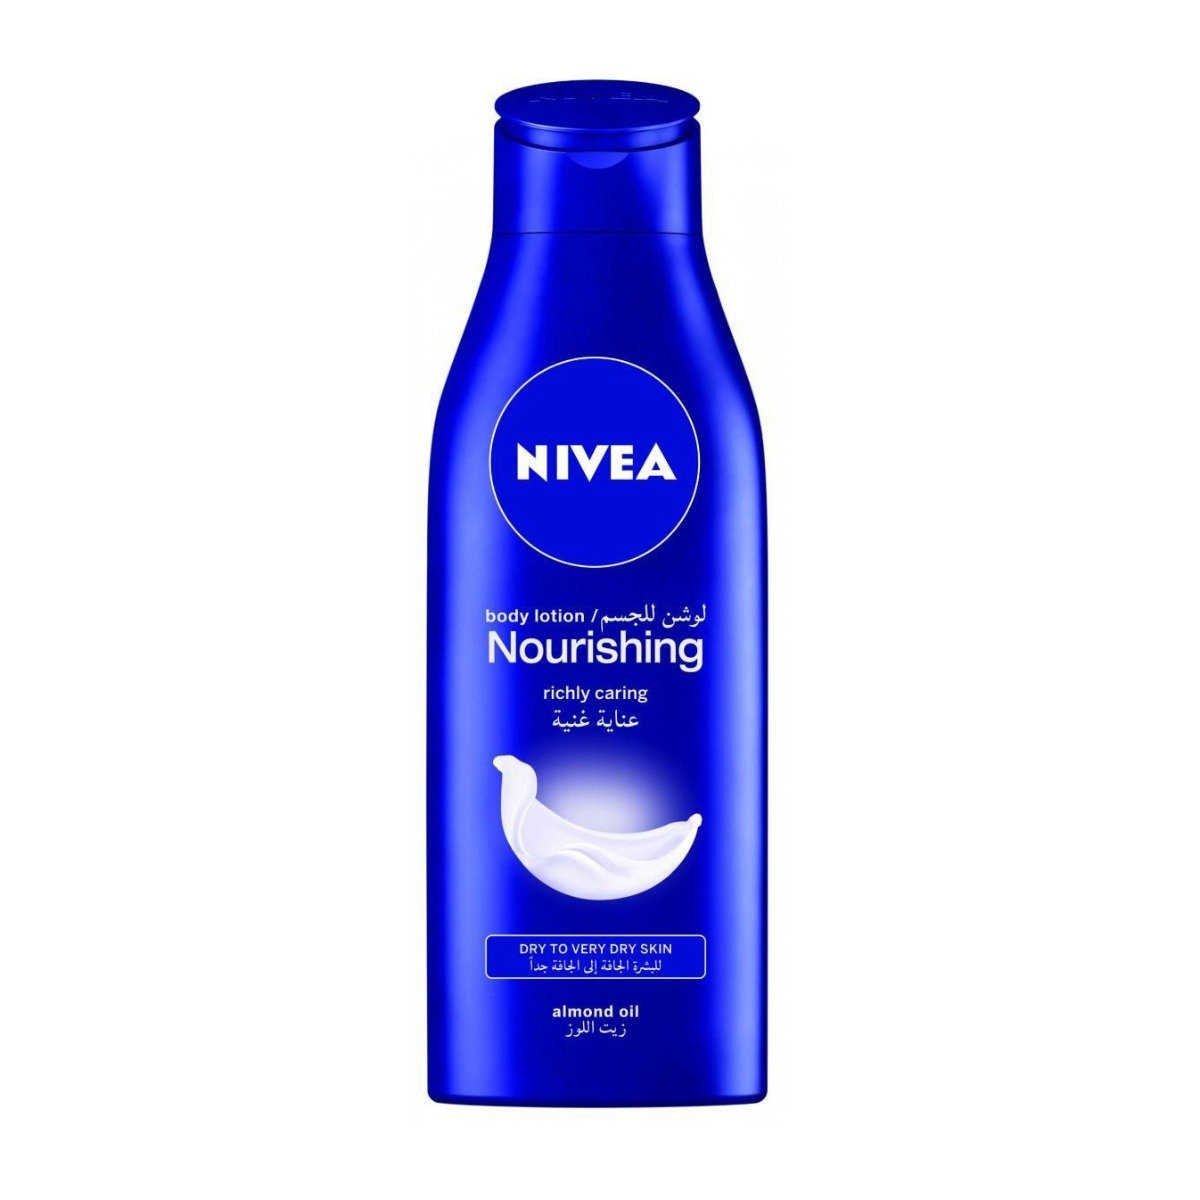 Nivea Nourishing Body Lotion Dry To Very Dry Skin - 250ml - Bloom Pharmacy